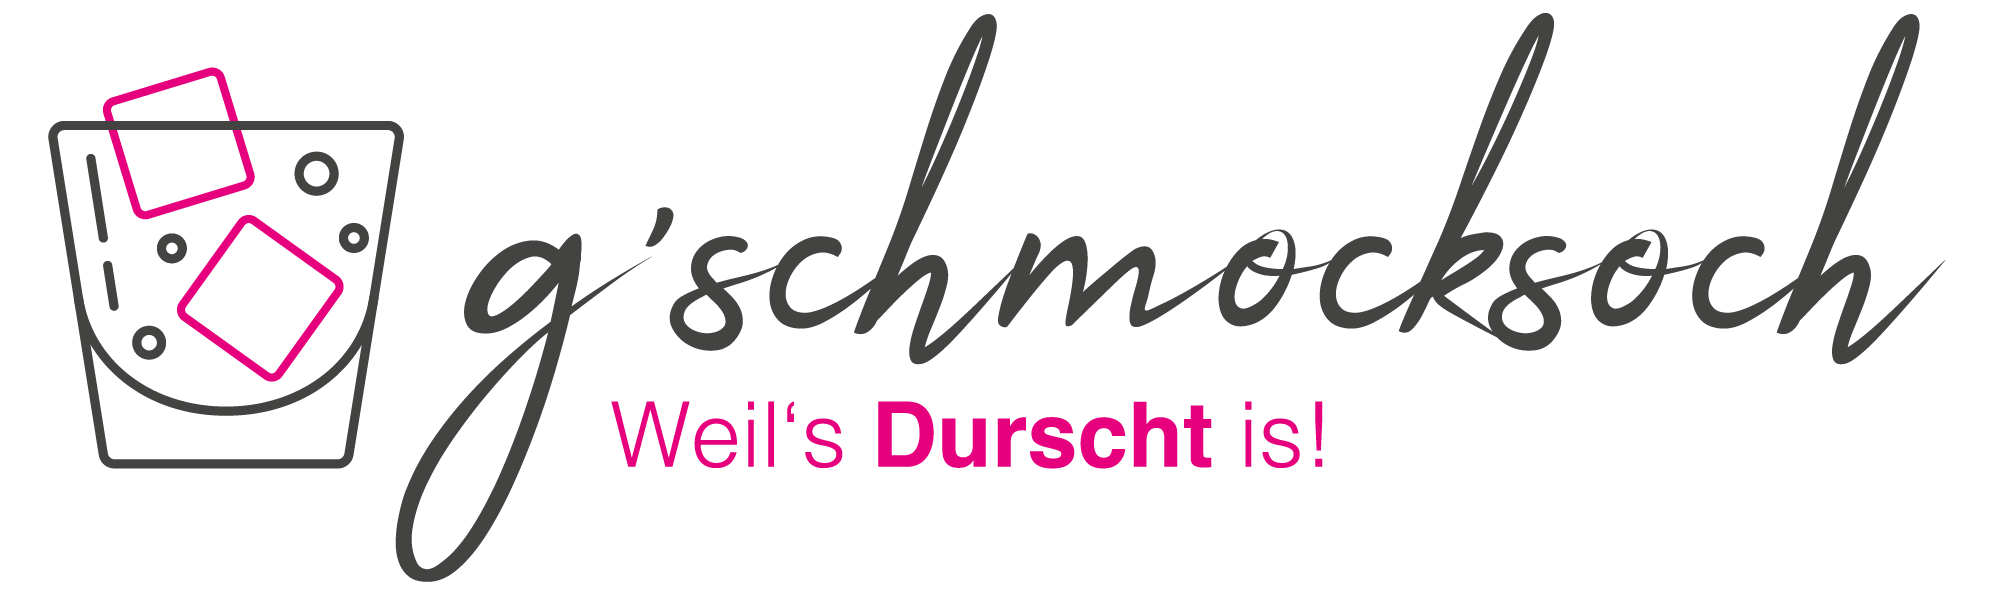 Gschmocksoch